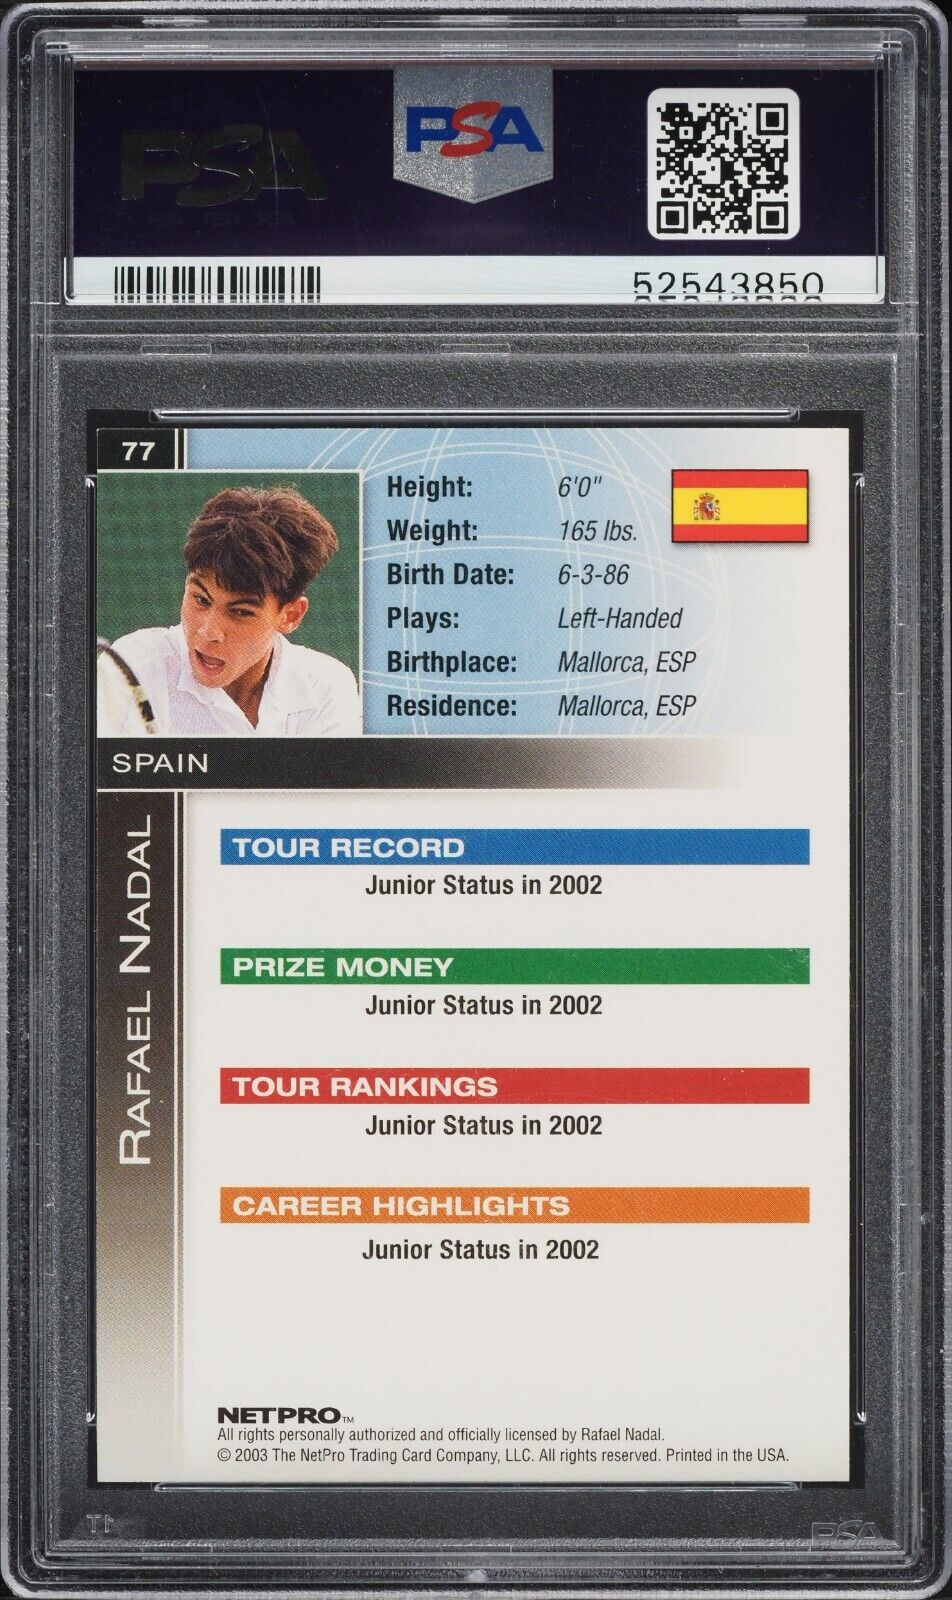 2003 Netpro International Series Tennis #77 Rafael Nadal Rookie Card RC PSA 10 - 643-collectibles